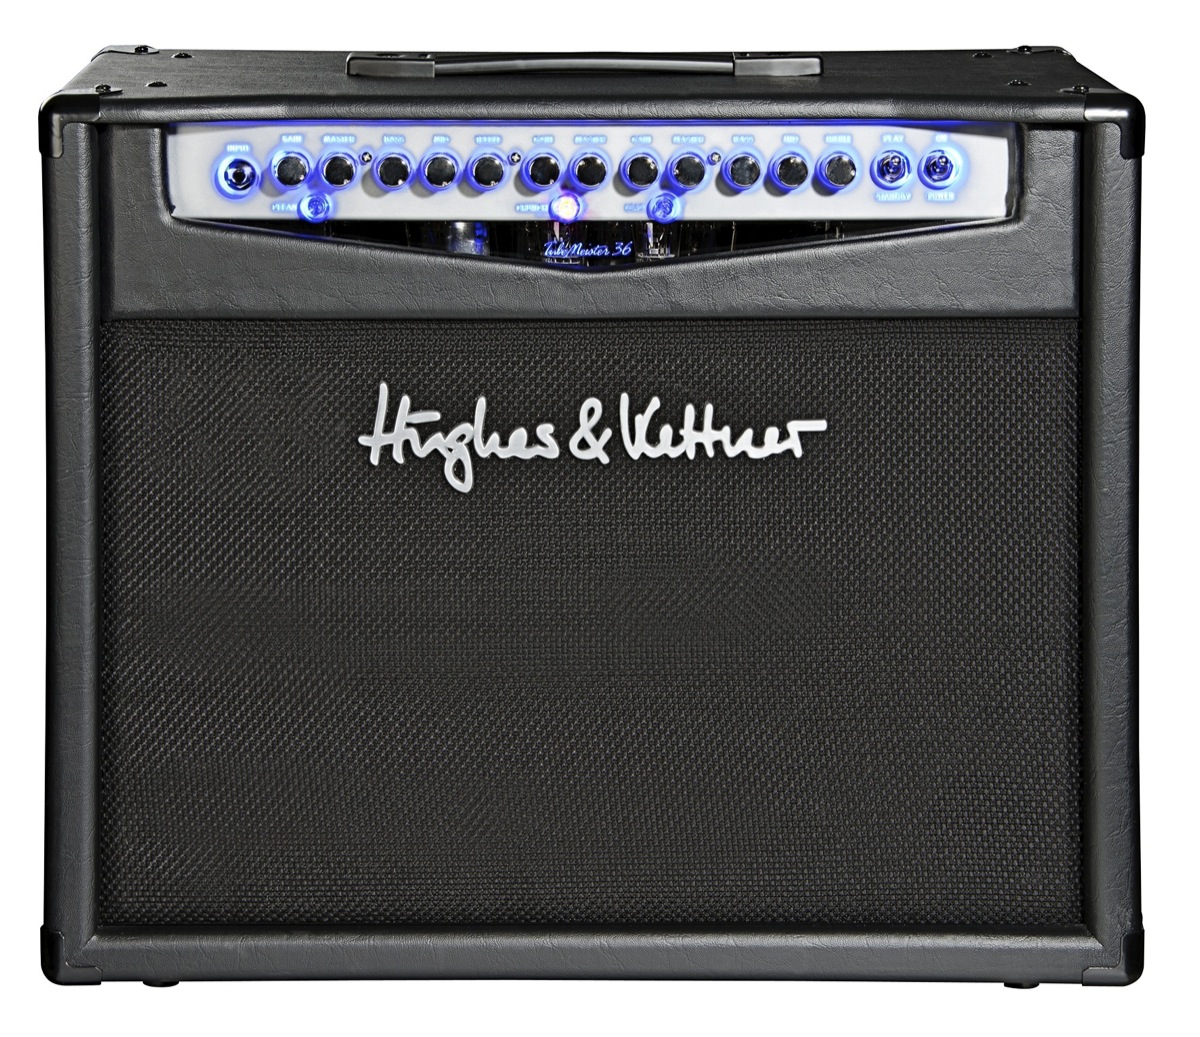 Hughes & Kettner Hughes and Kettner TubeMeister 36 Guitar Combo Amplifier, 36 Watts